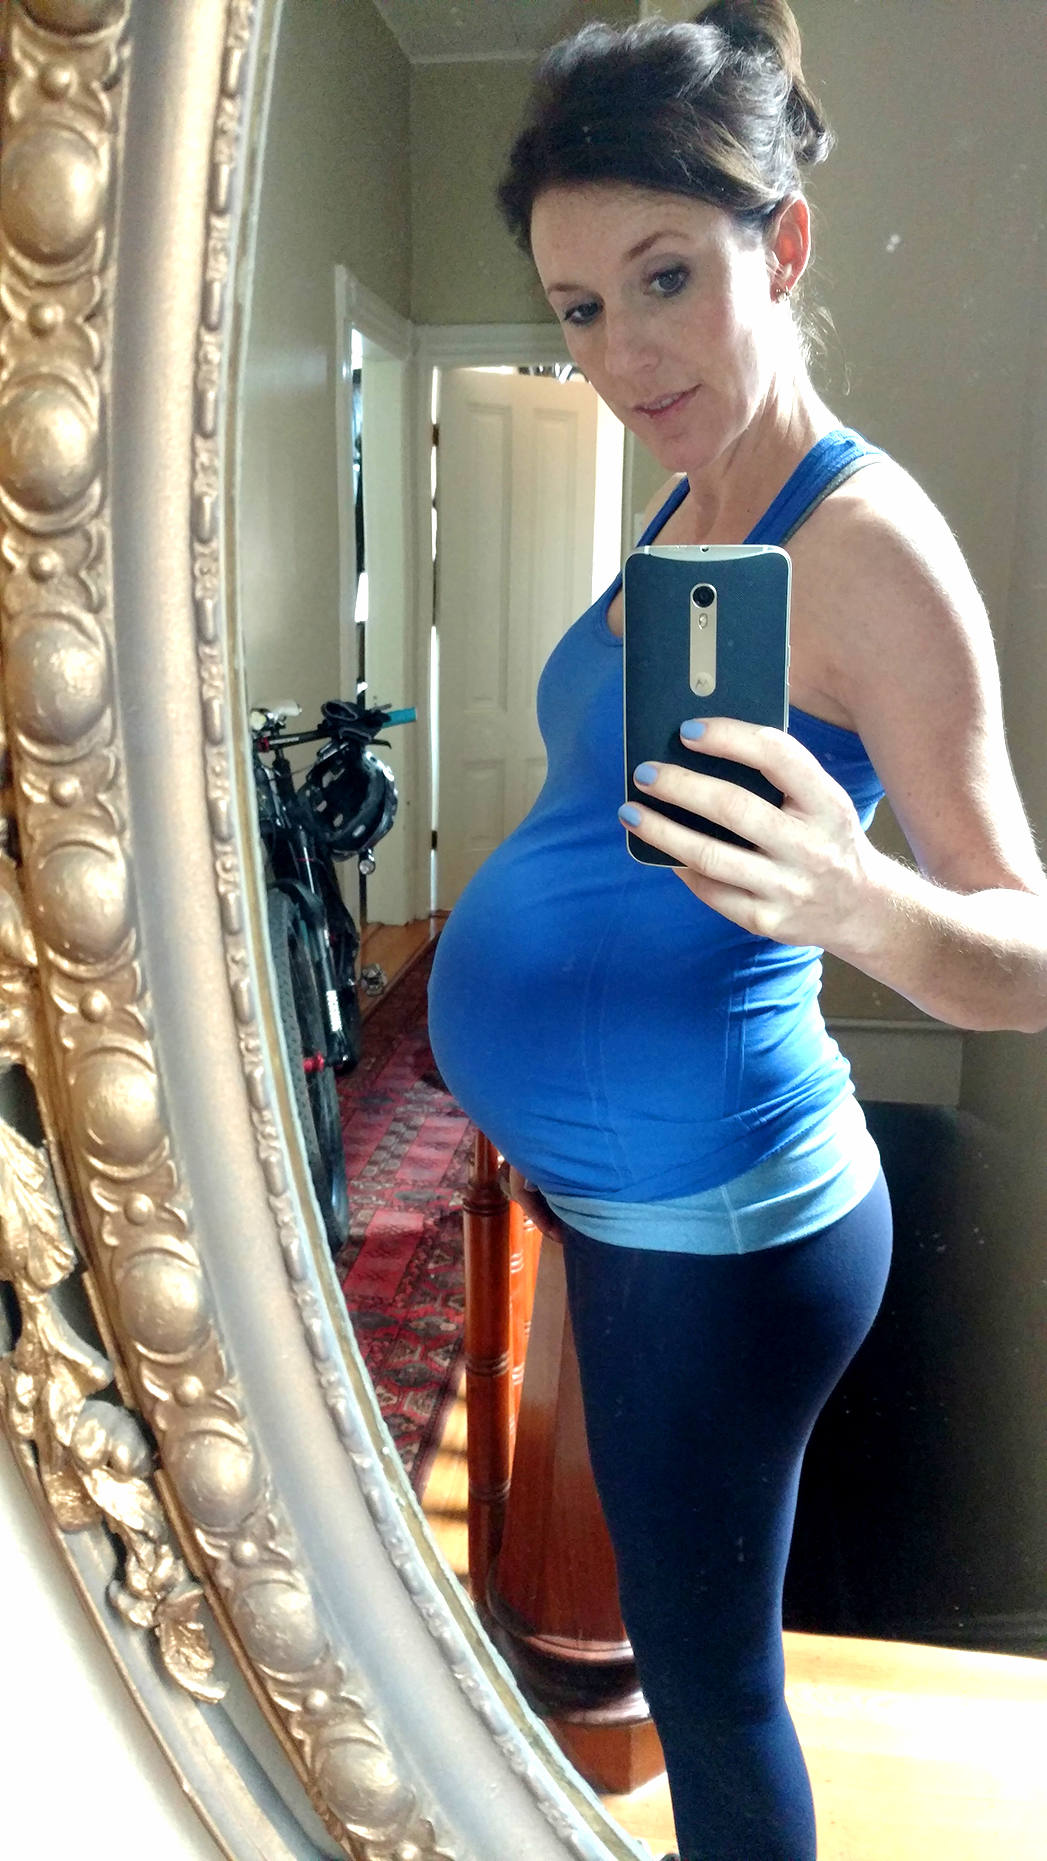 Third trimester prenatal yoga